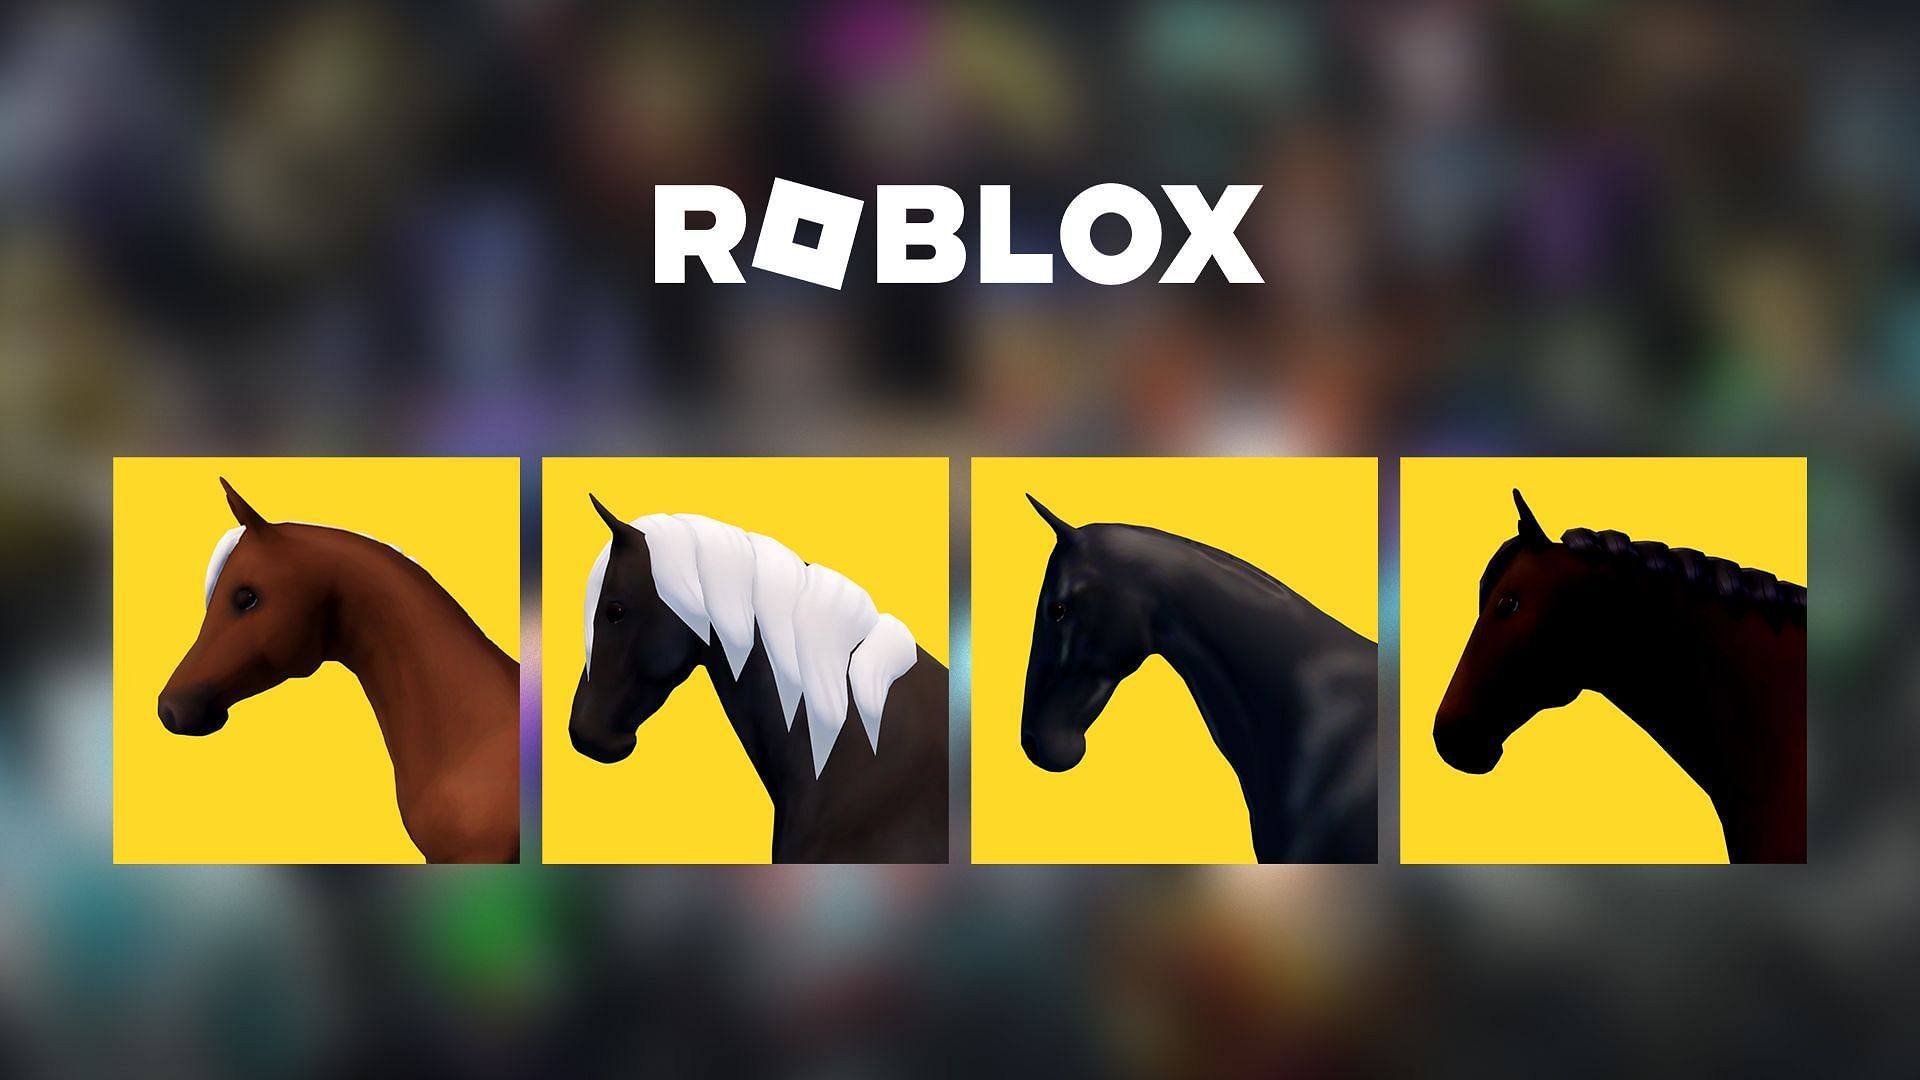 Best Roblox Horse Games